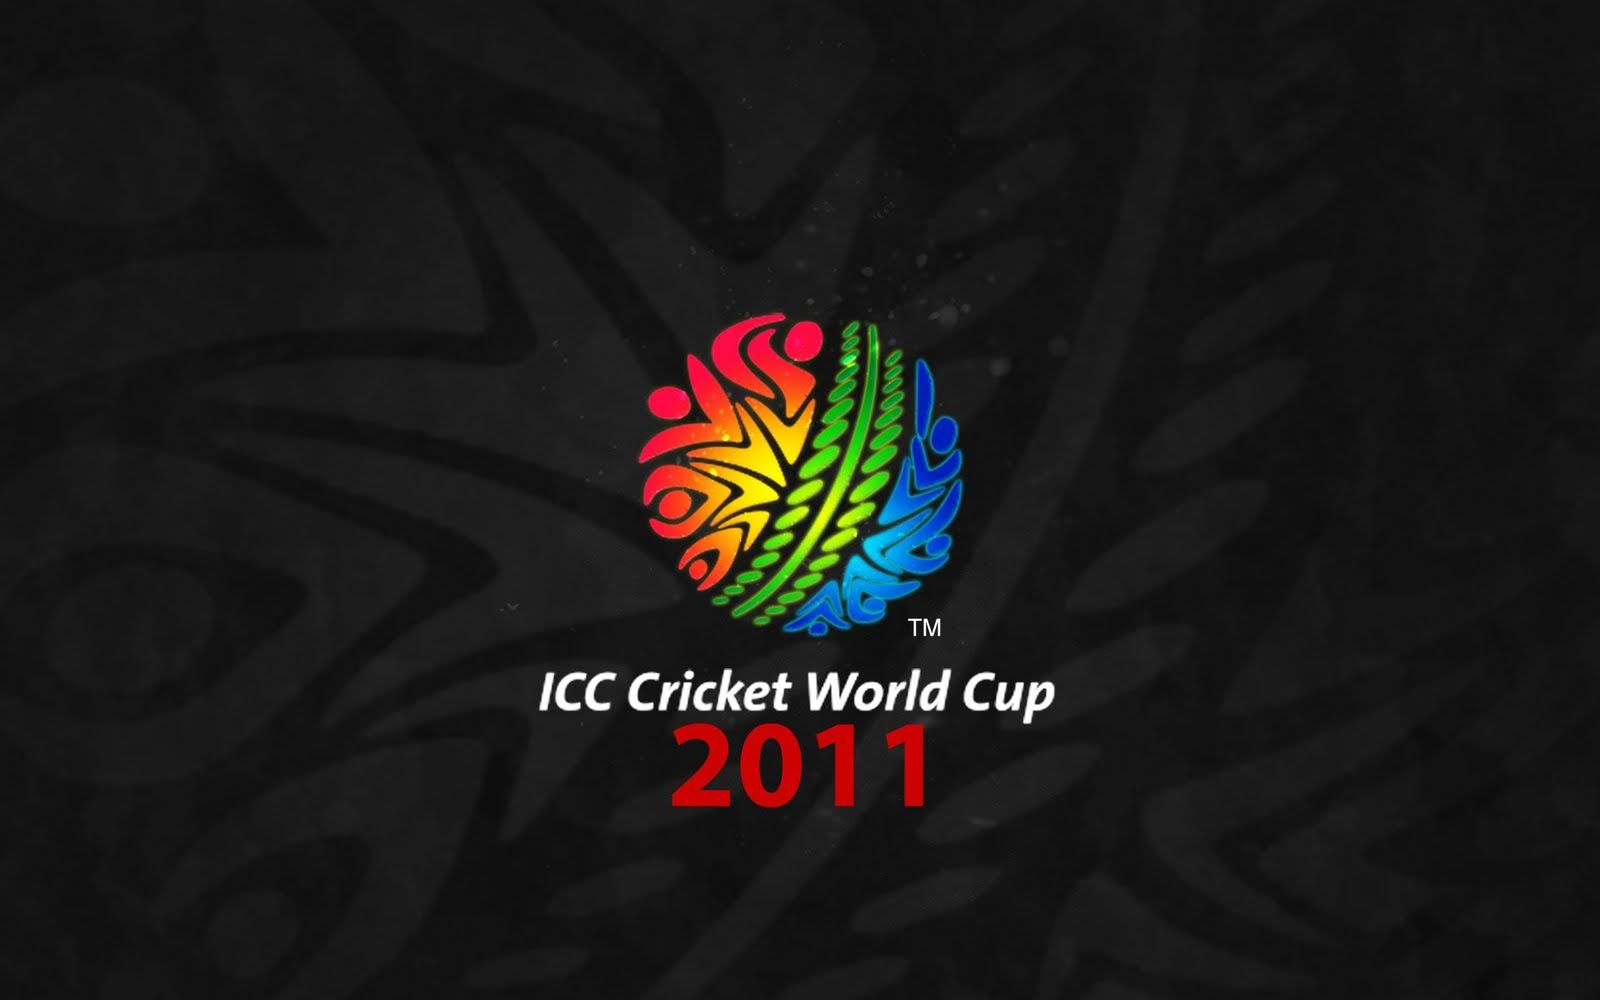 HD Wallpaper: ICC Cricket World Cup 2011 Wallpaper